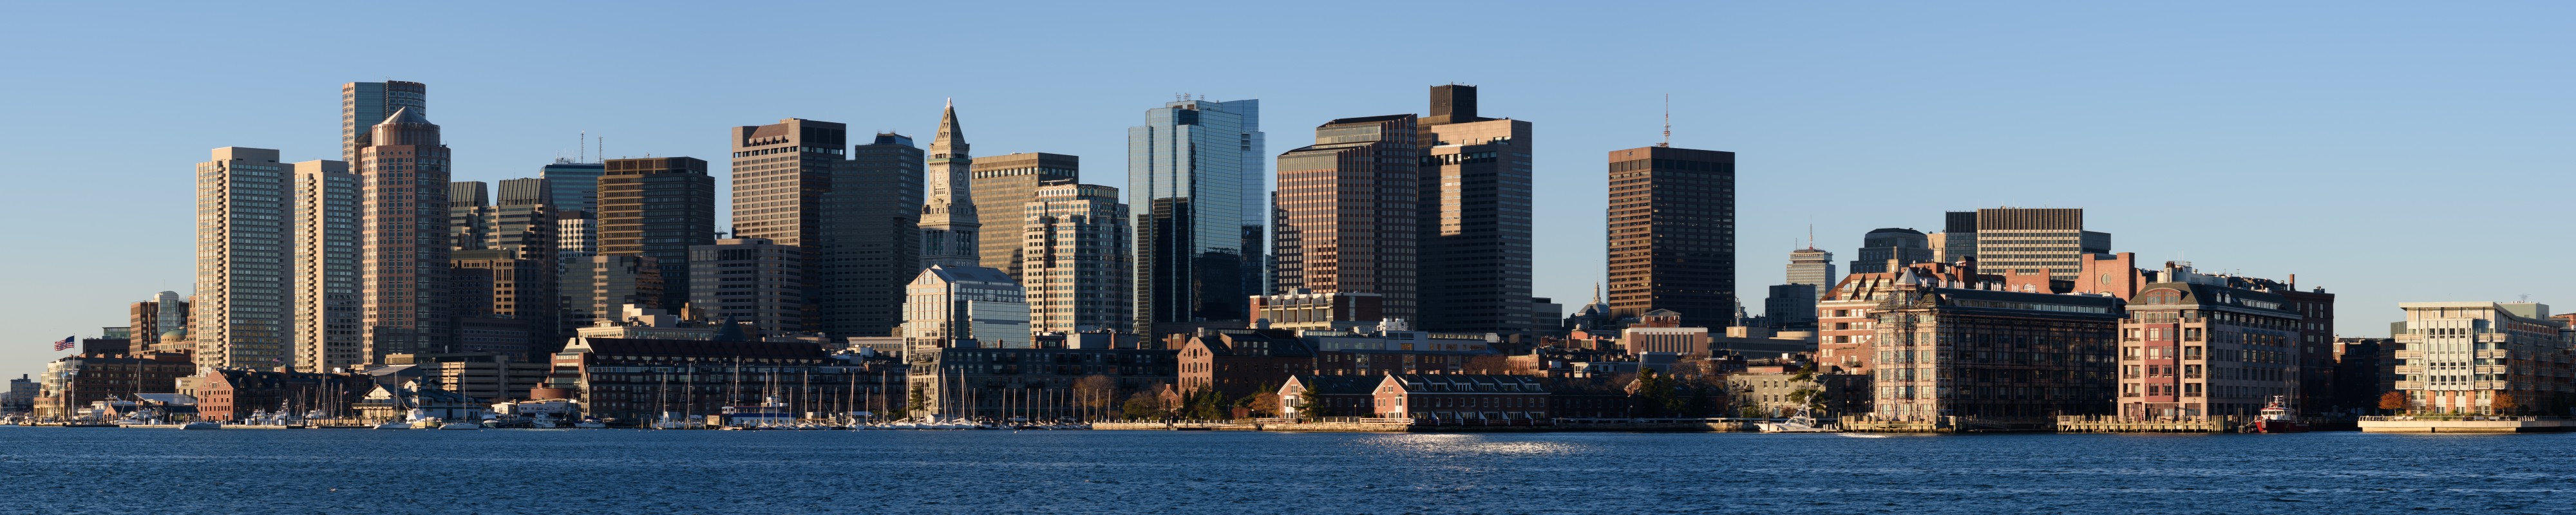 Boston skyline from East Boston November 2016 panorama 4